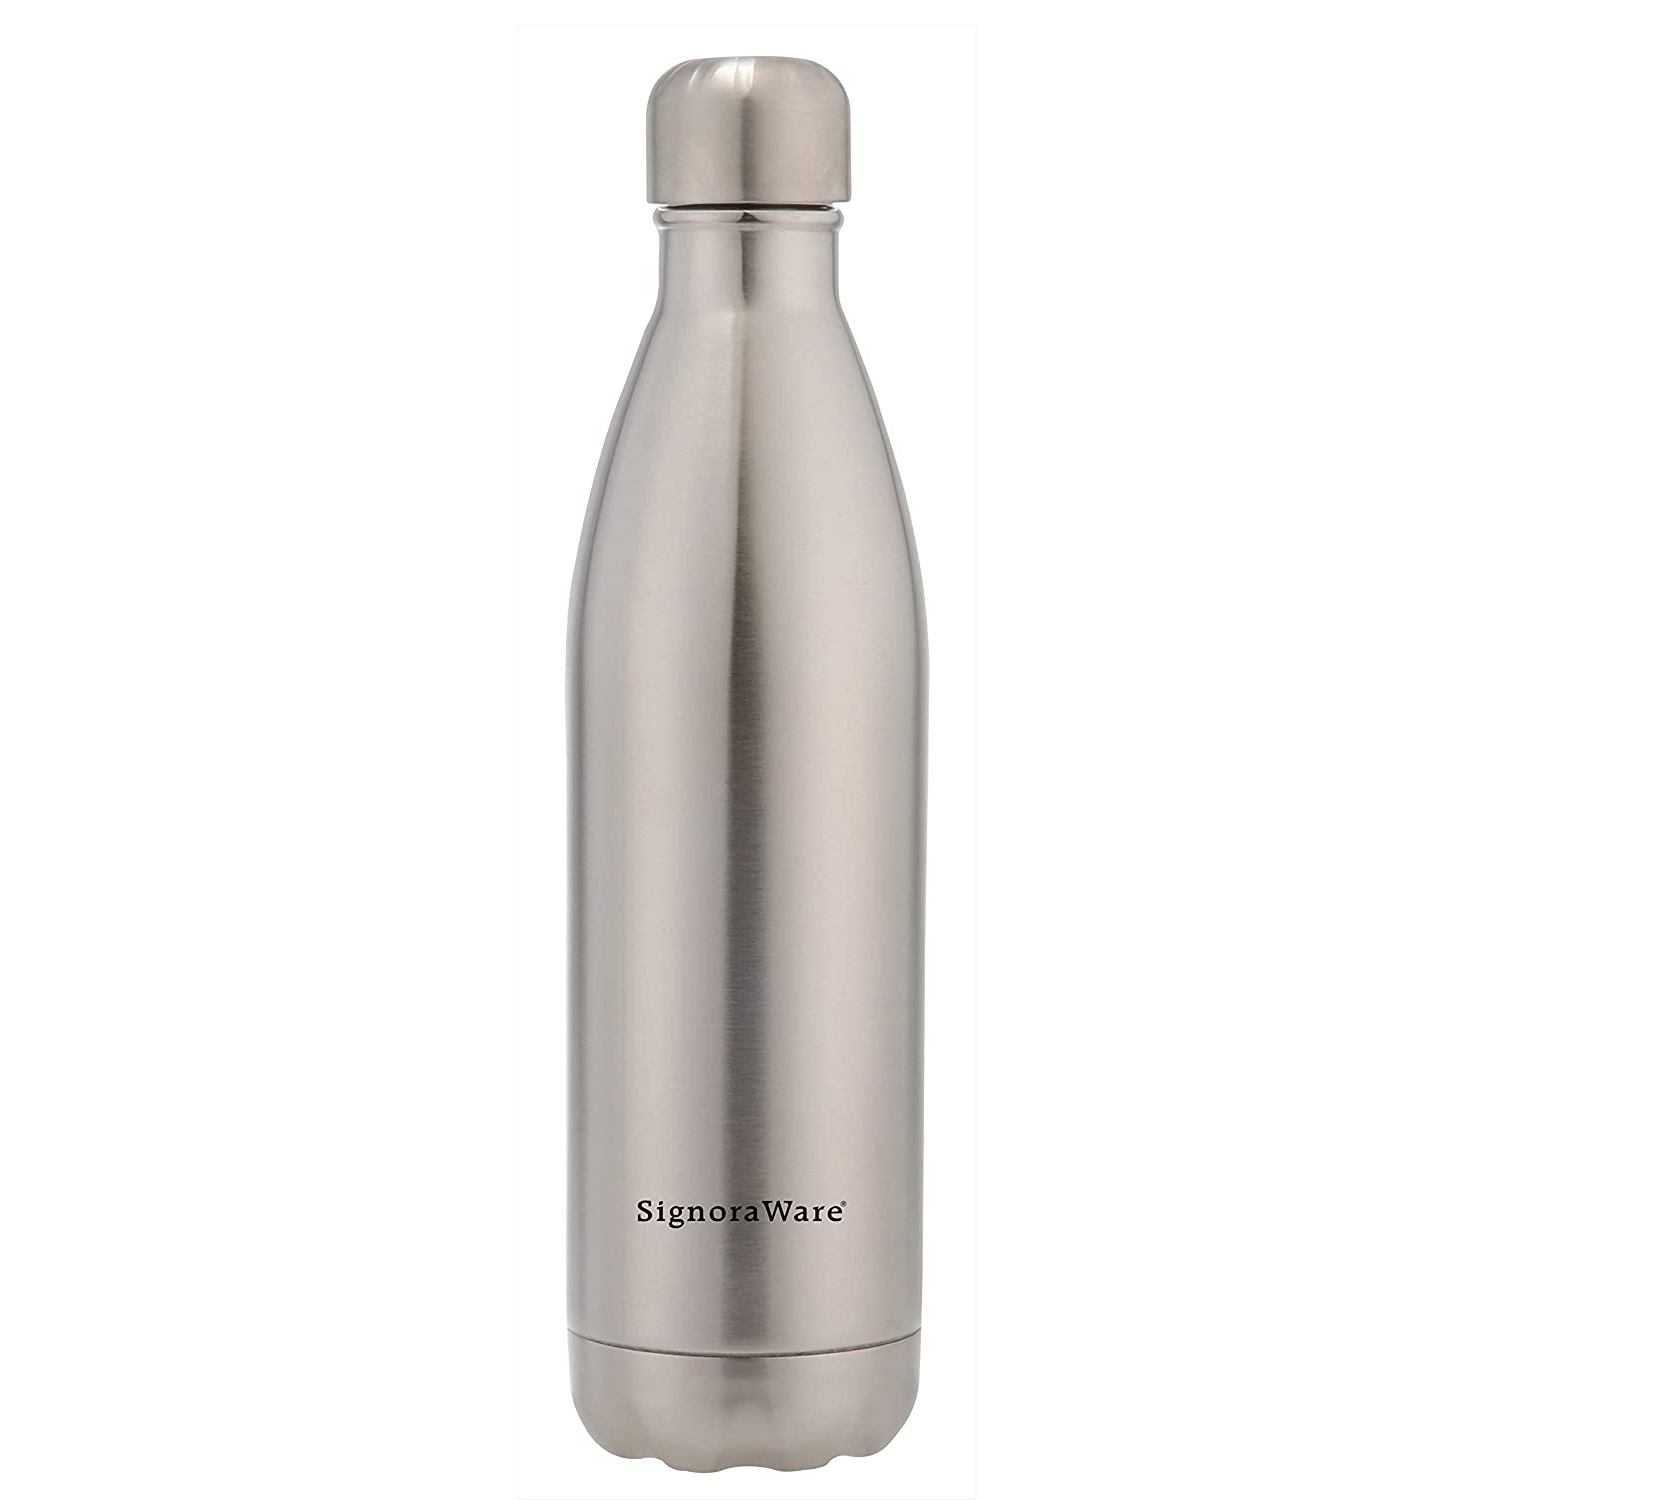 Signoraware Stainless Steel Aqualene Vaccum Flask Bottle 1000ml